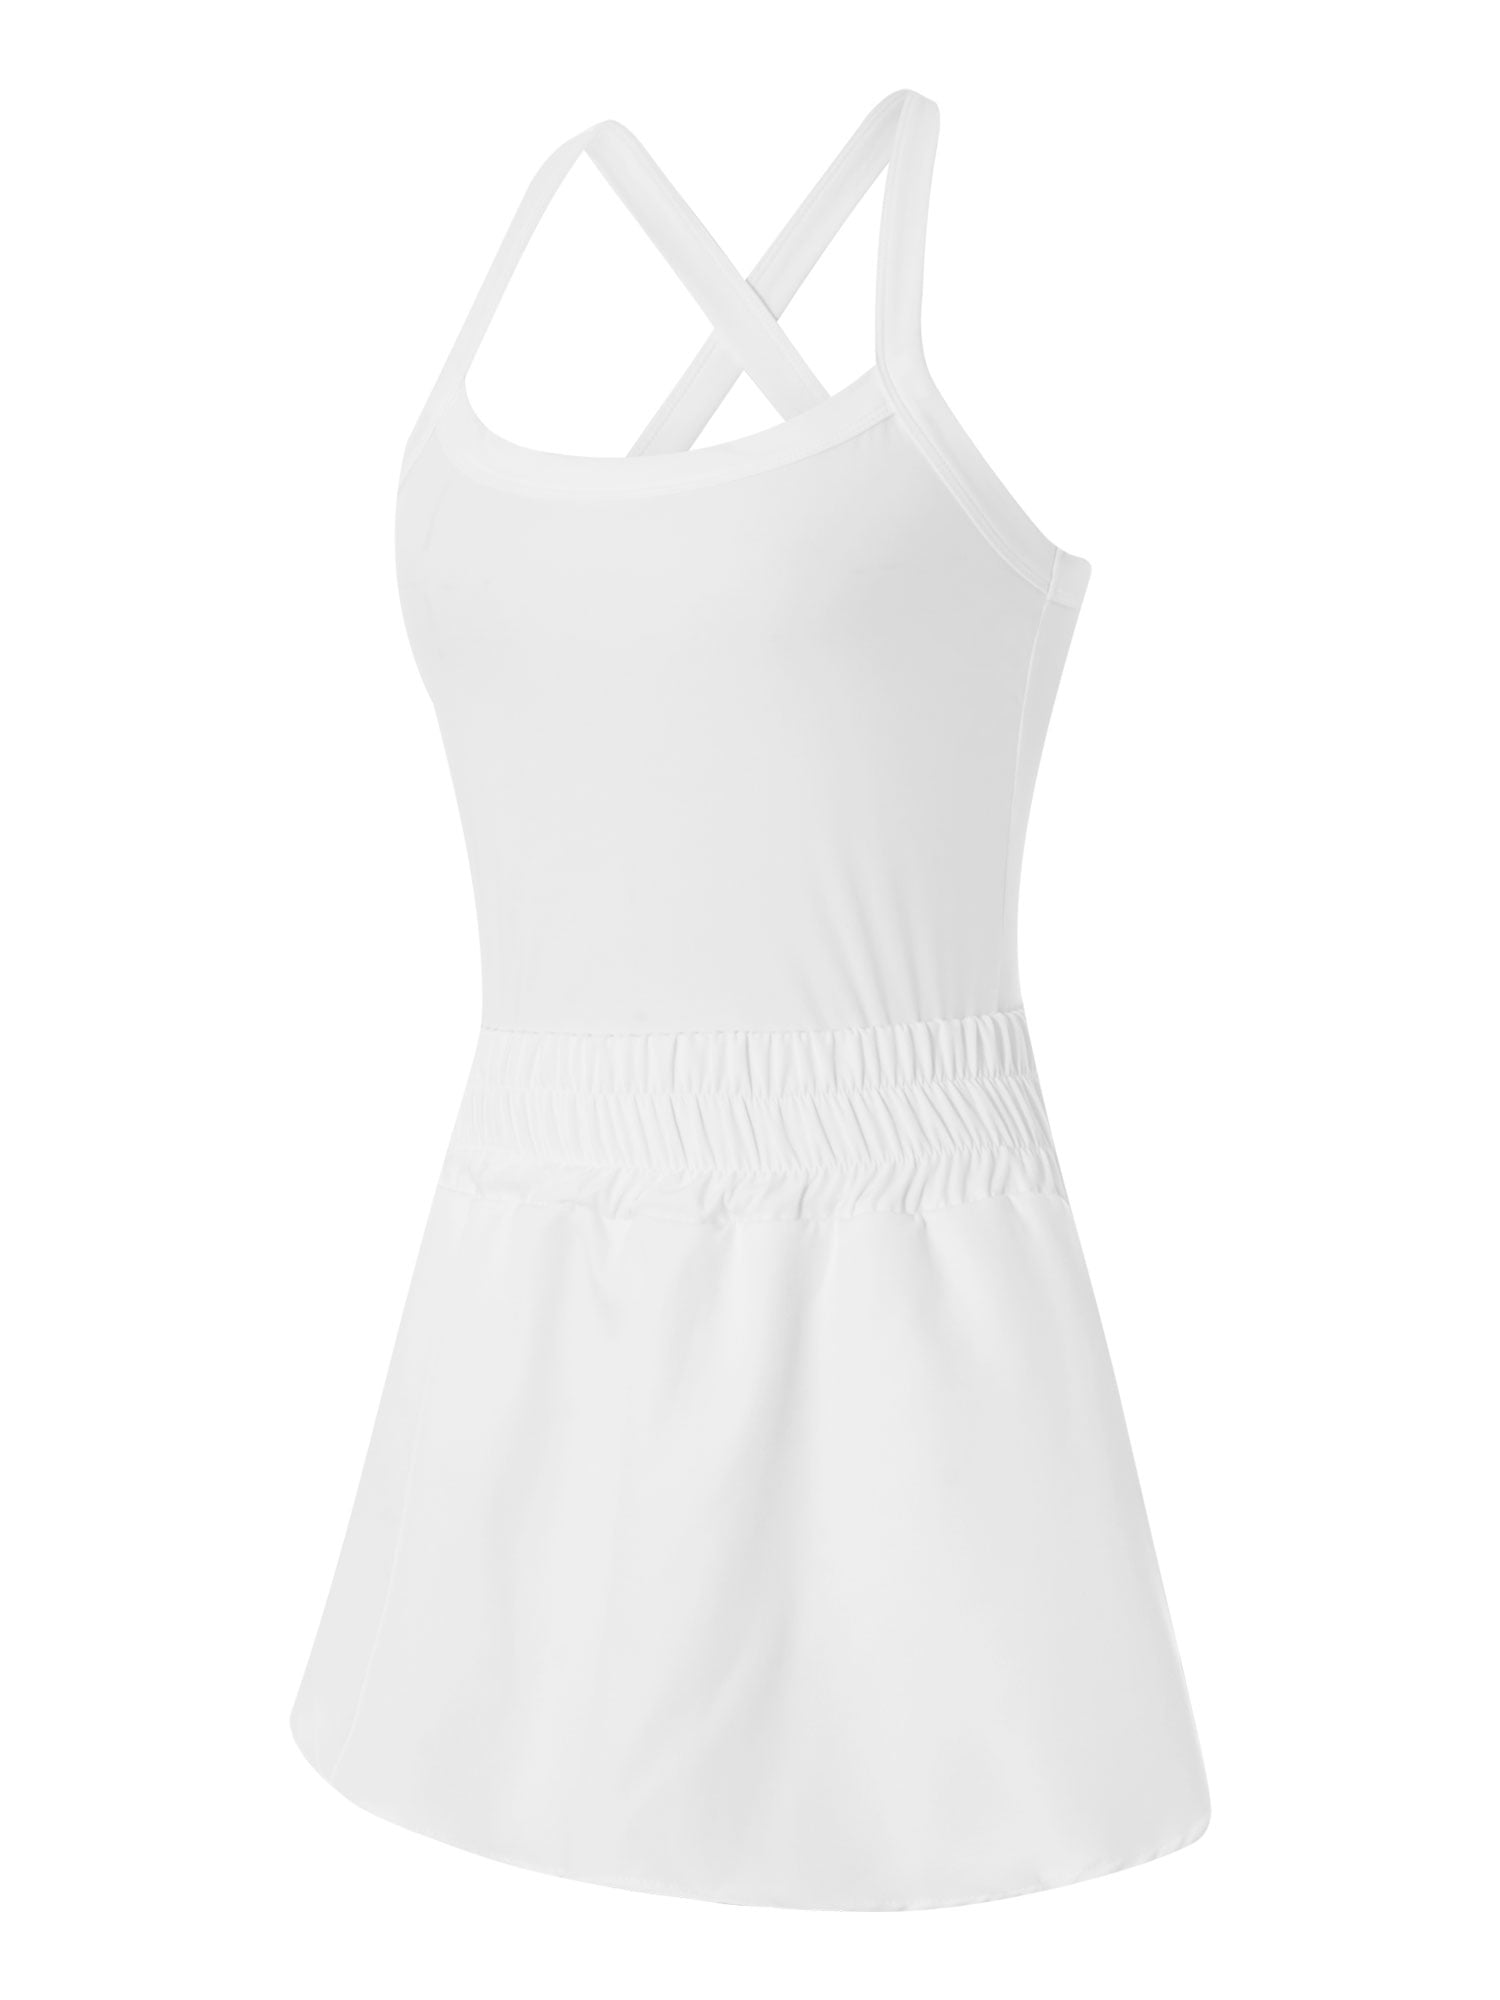 Women's Tennis Dress FP Dupes Hot Short Dresses Backless Workout